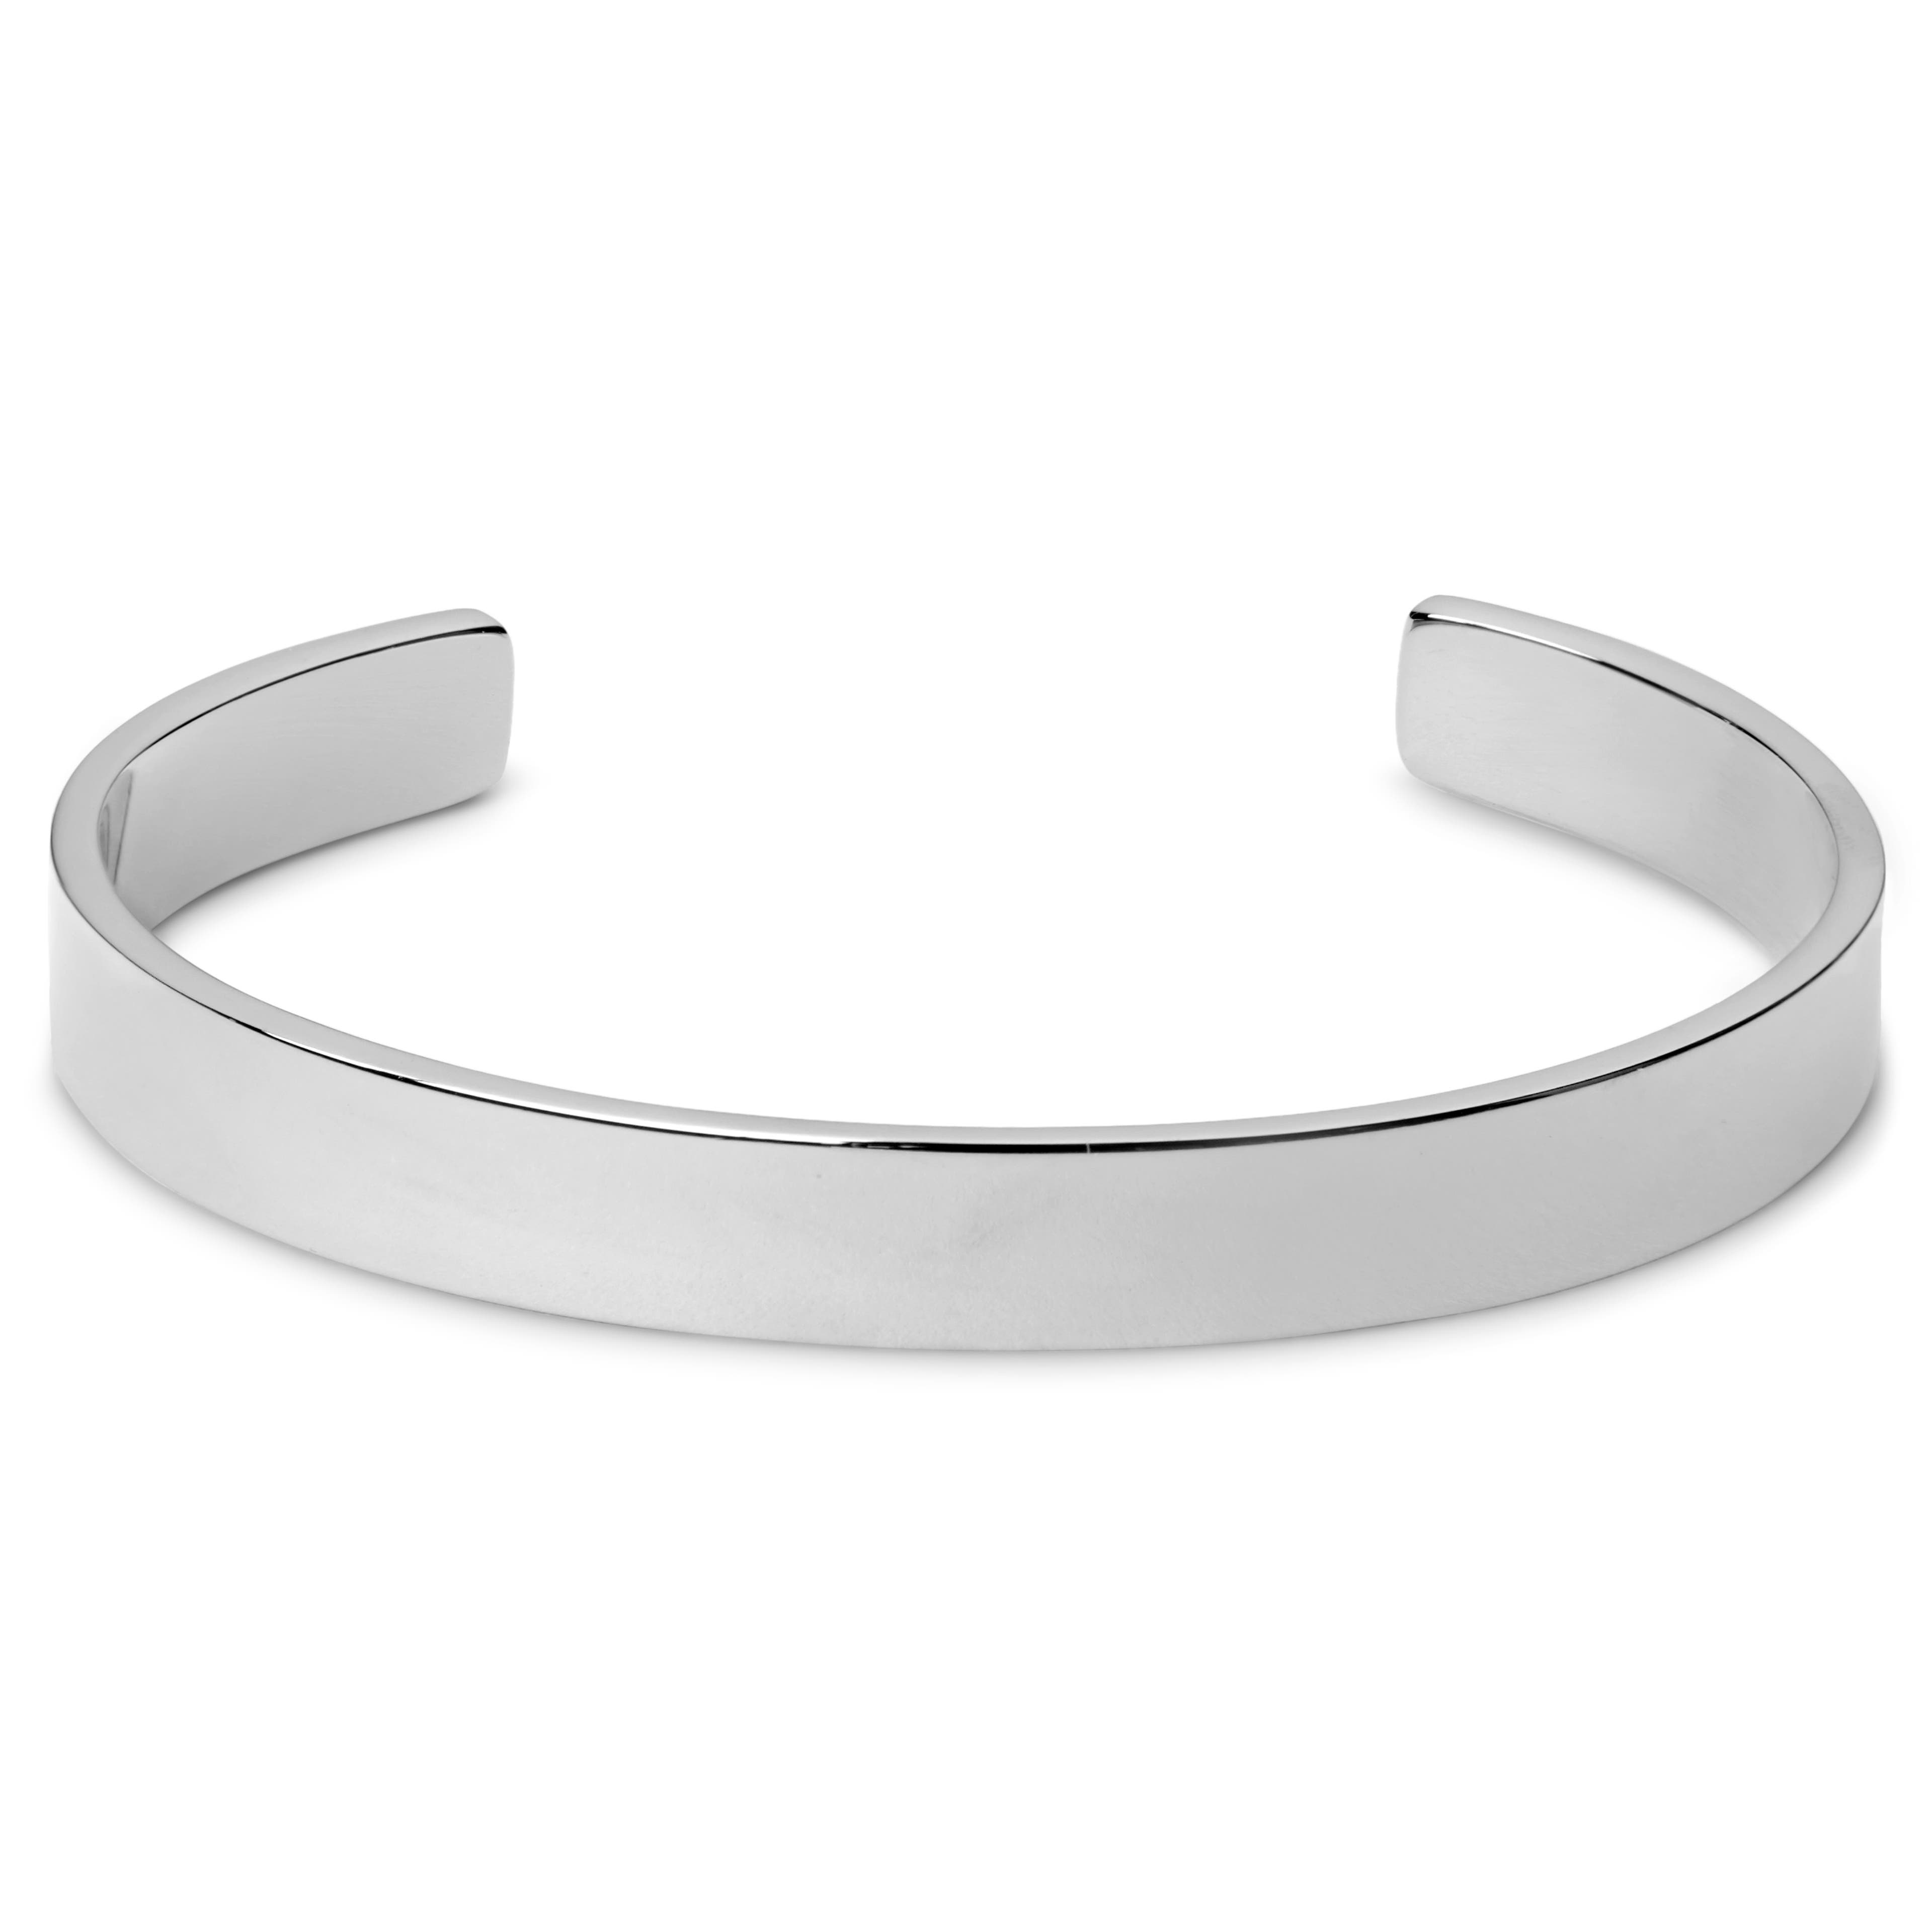 Silver-Tone Stainless Steel Cuff Bracelet